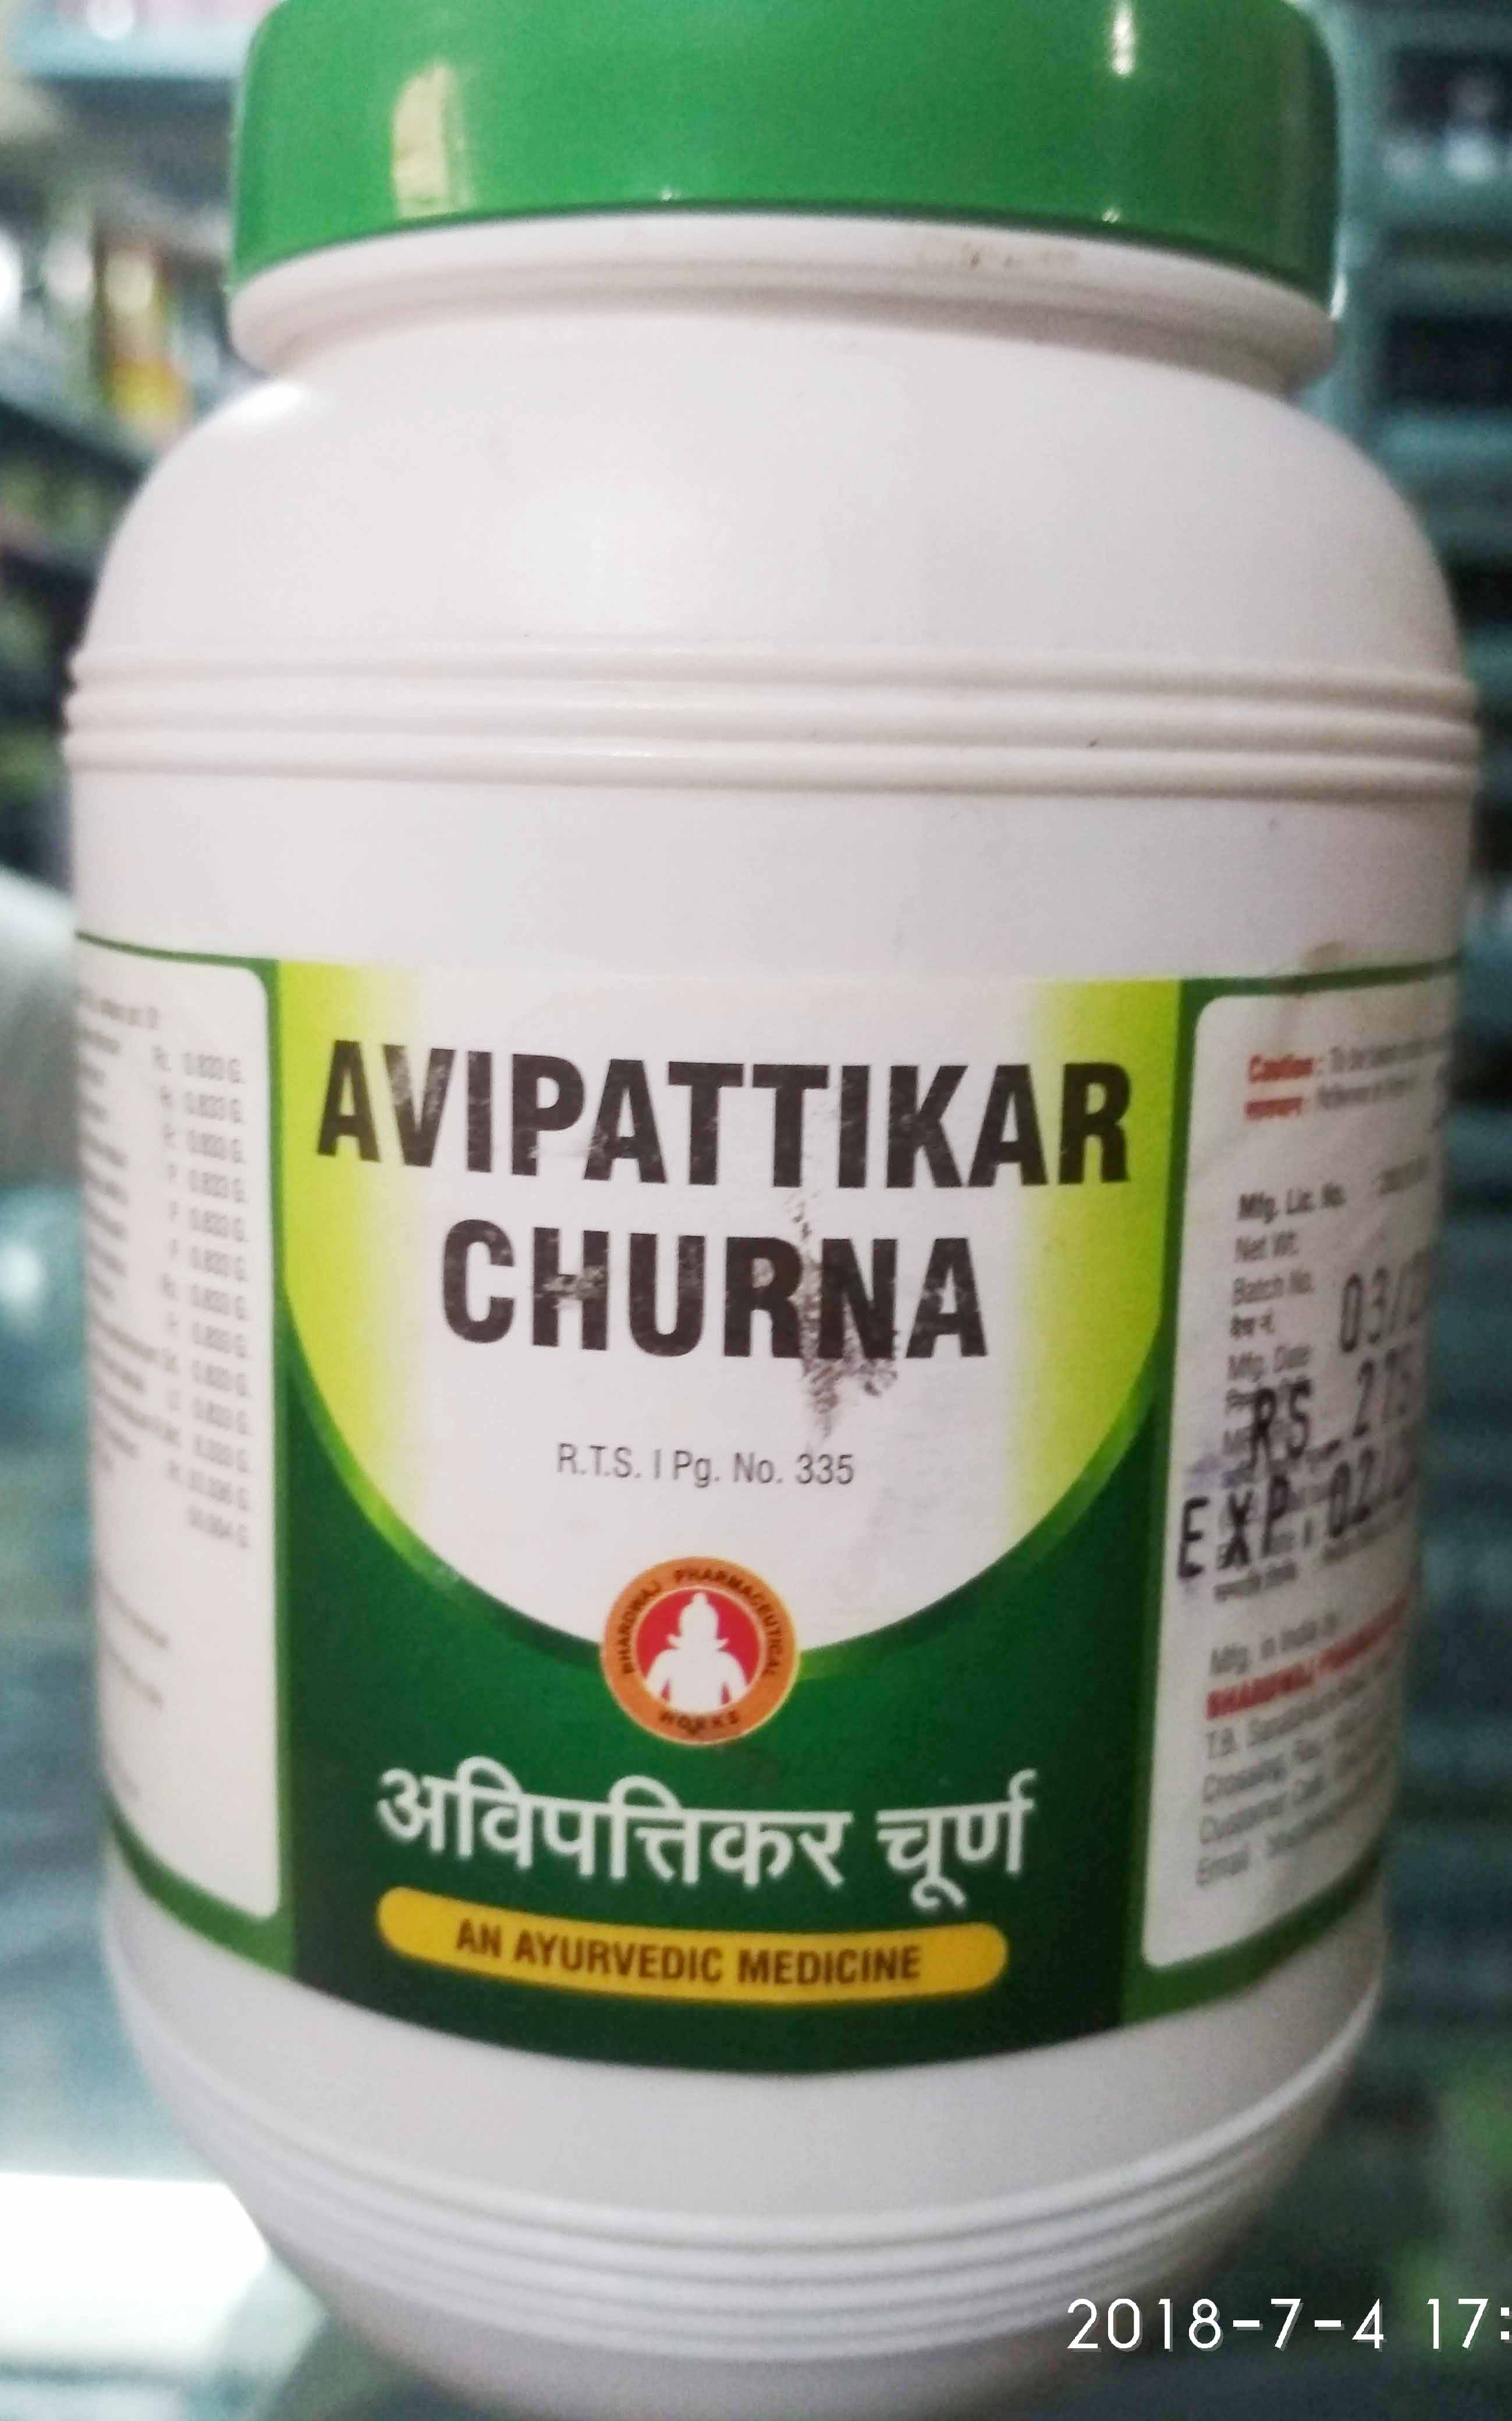 avipattikar churna 1 kg upto 20% off bharadwaj pharmaceuticals indore